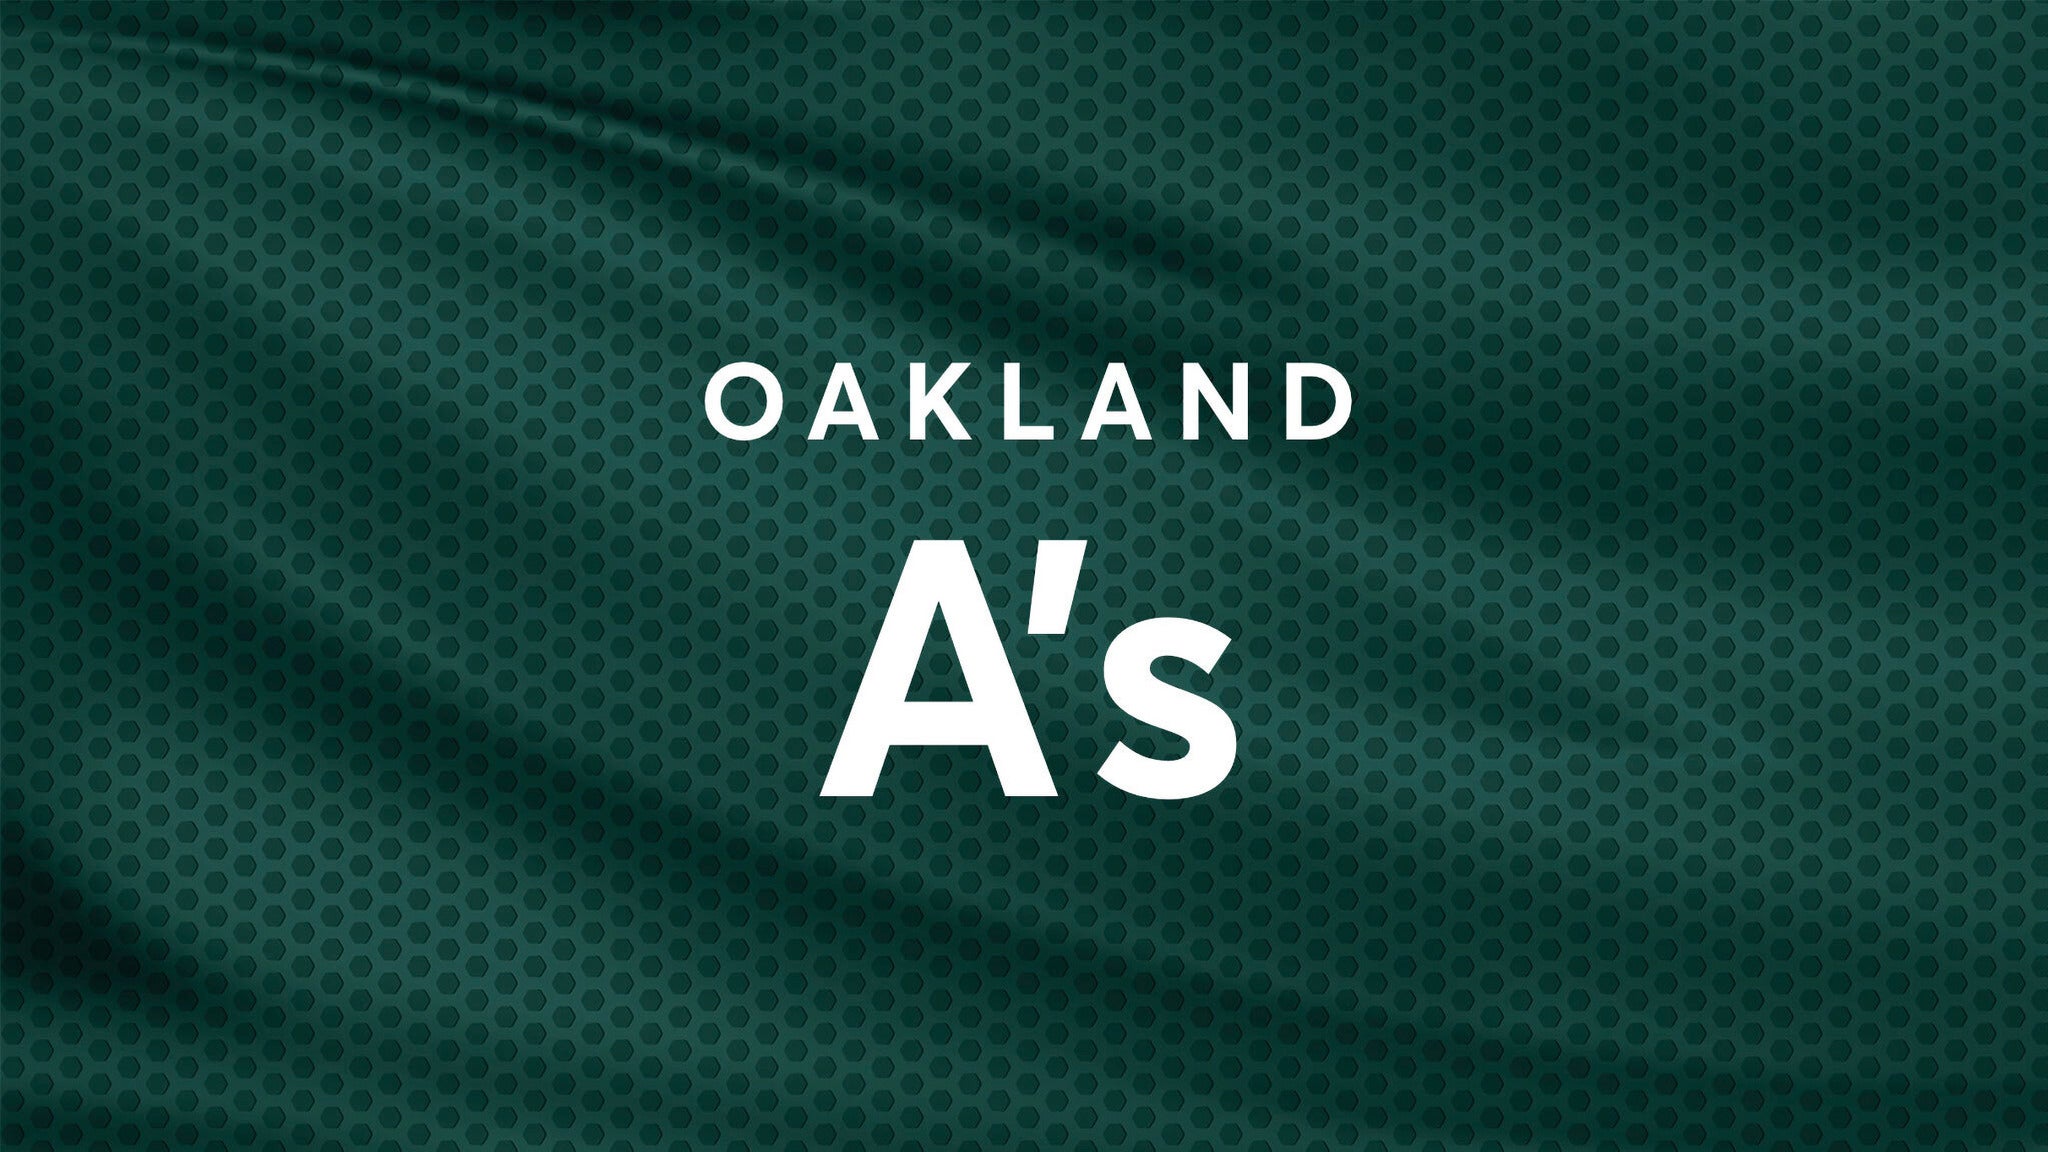 Oakland Athletics vs. Seattle Mariners